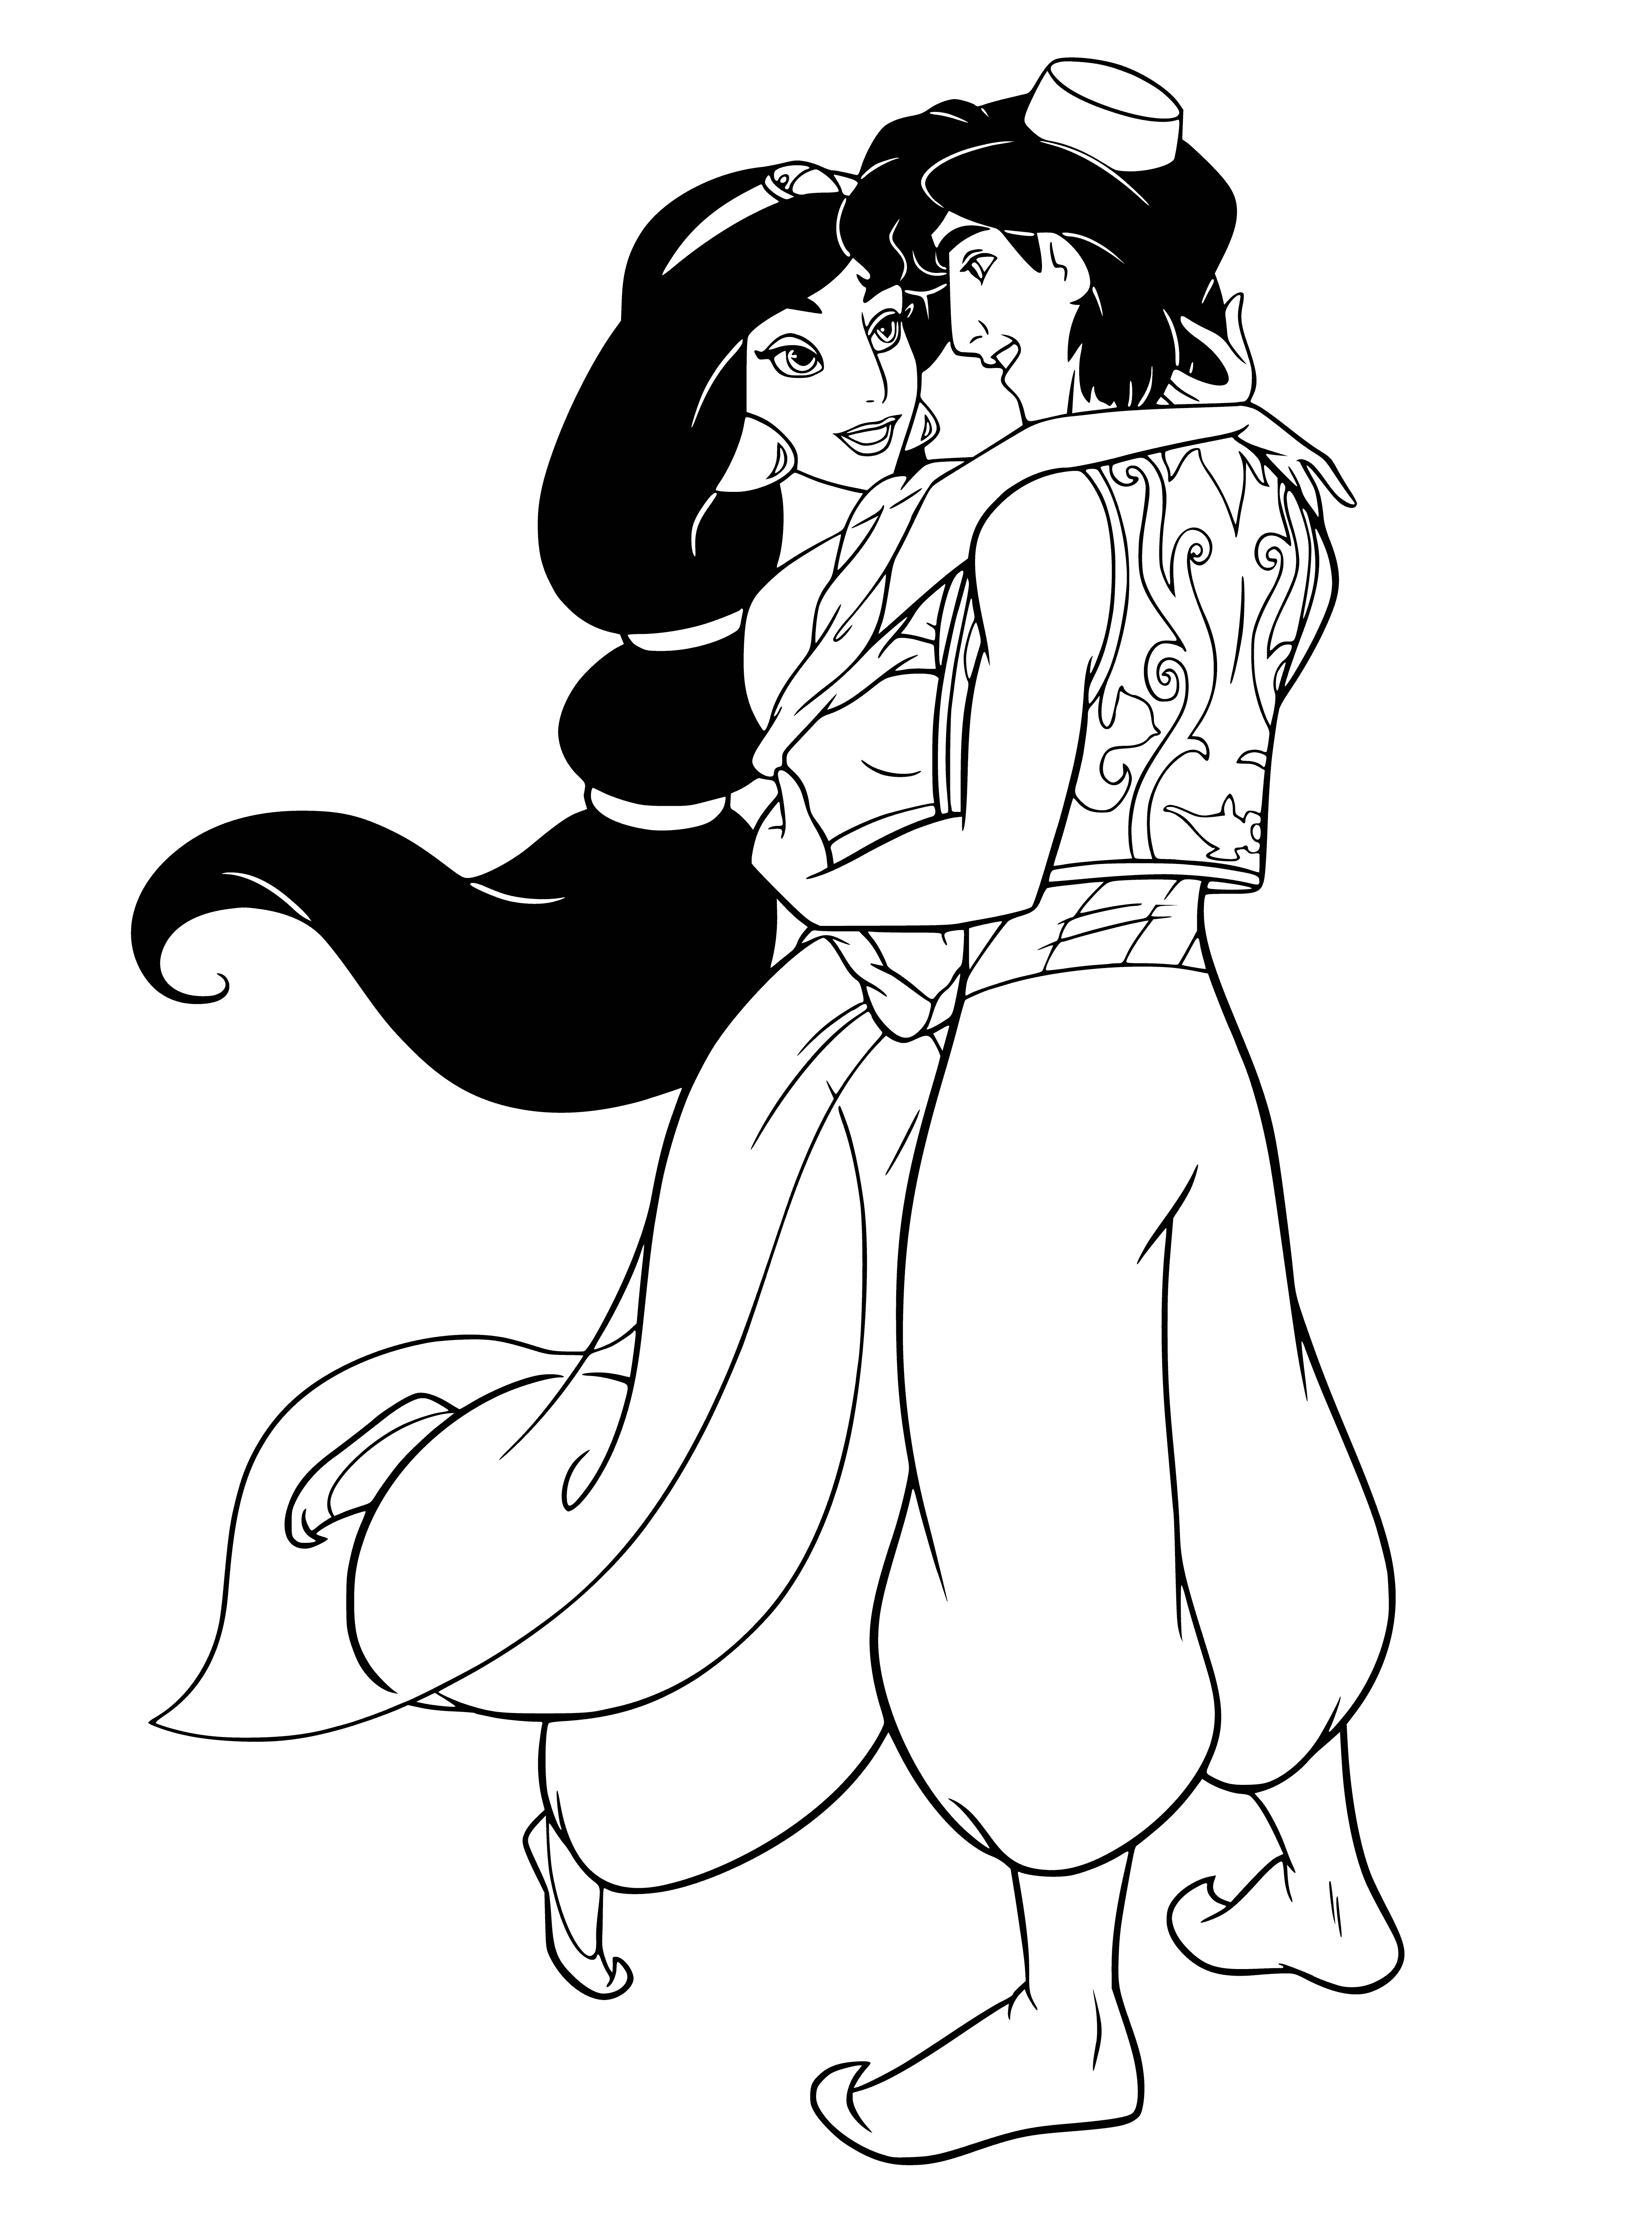 Princess Jasmine and Aladdin coloring page